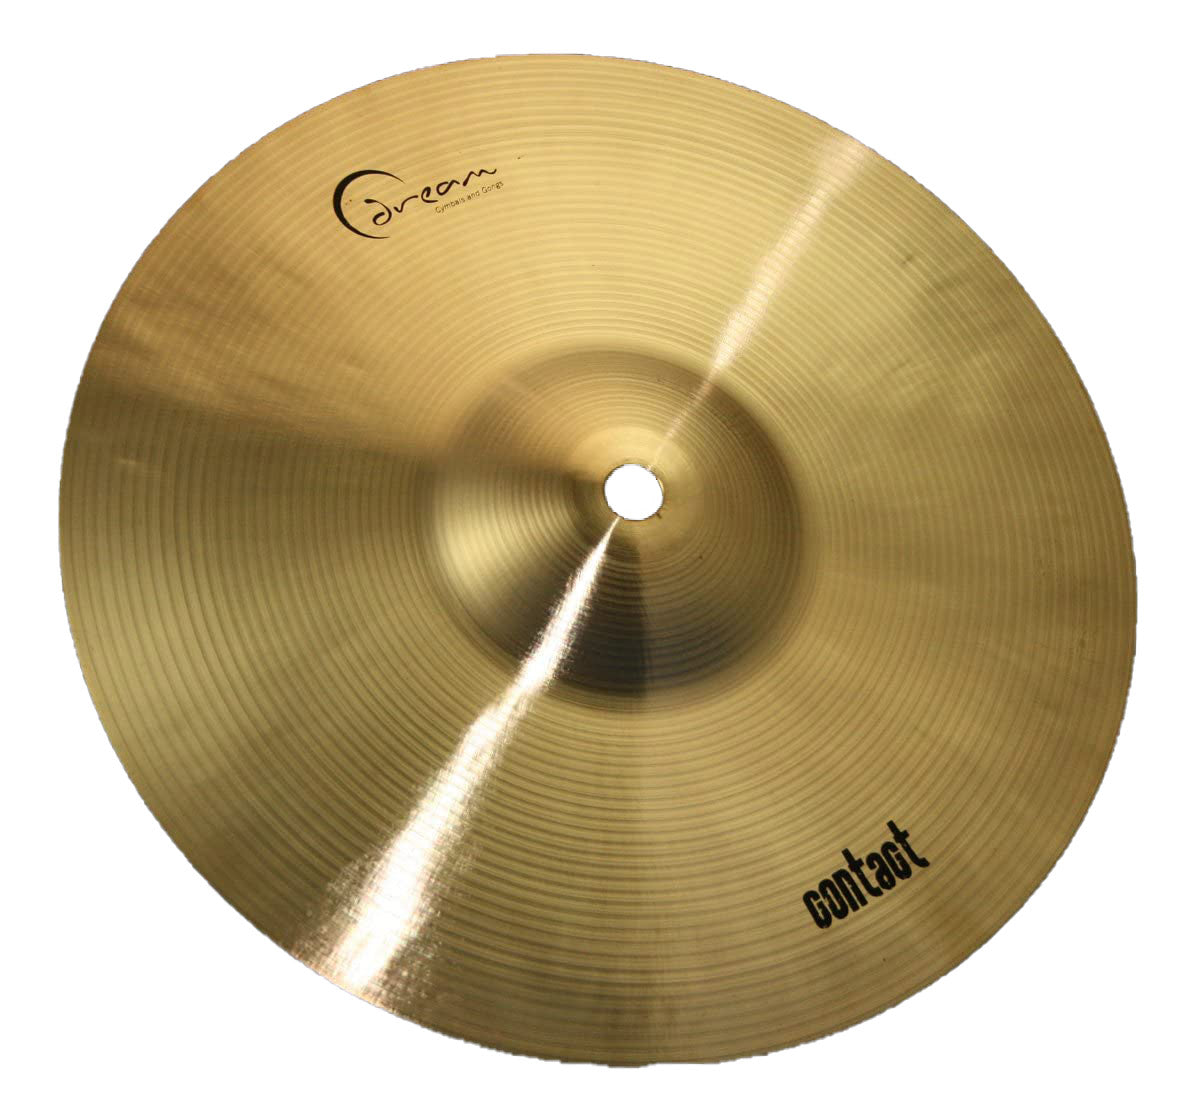 Dream 10” C-SP10 Contact Series Splash Cymbal